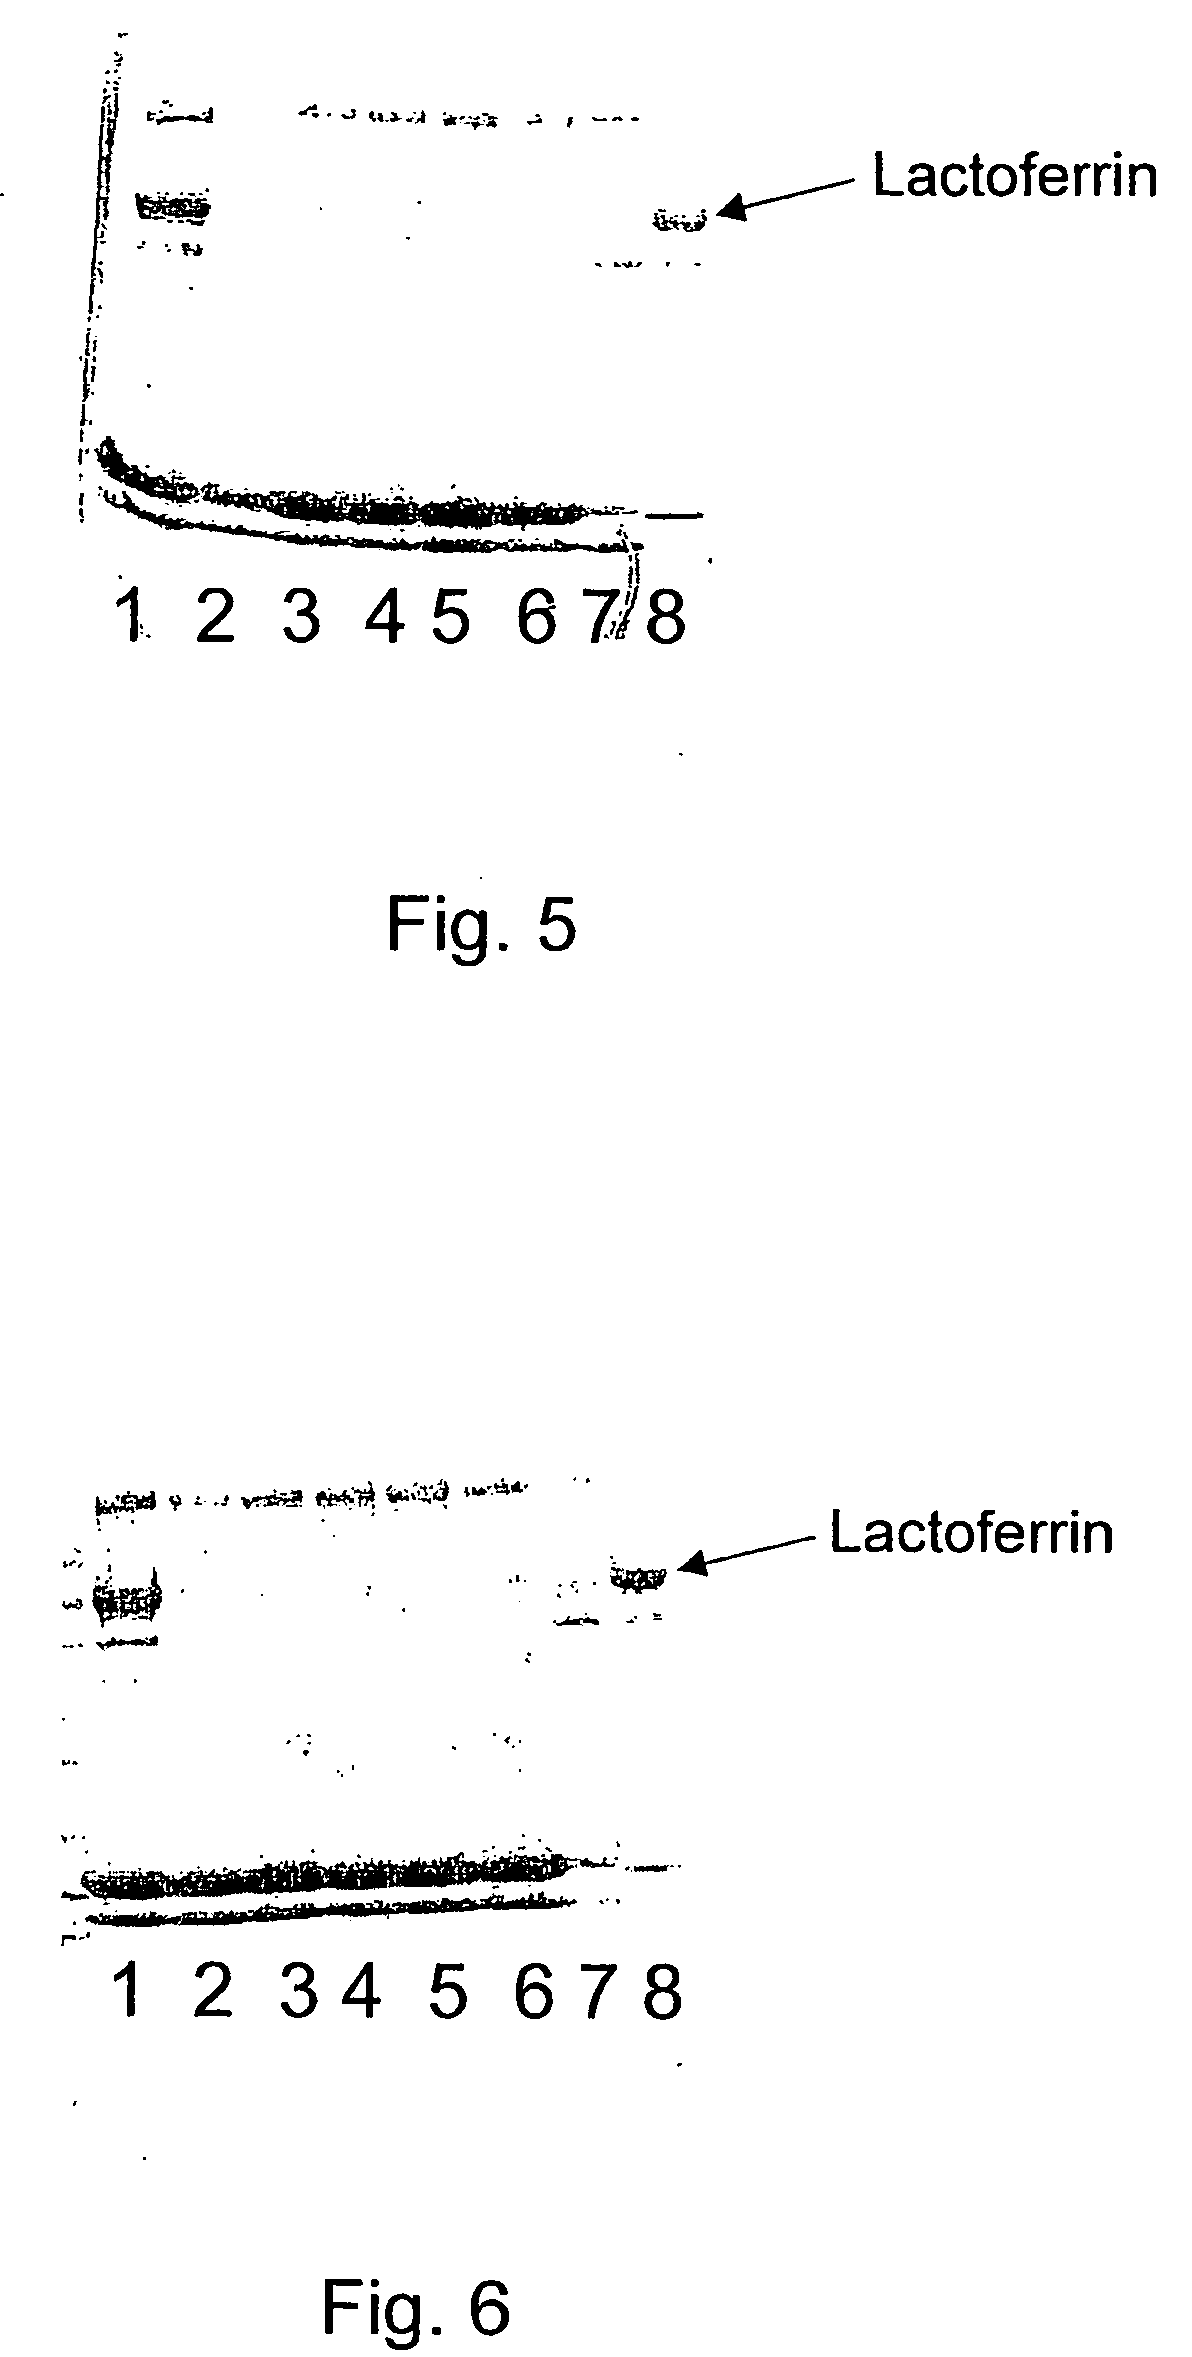 Process of isolating lactoferrin